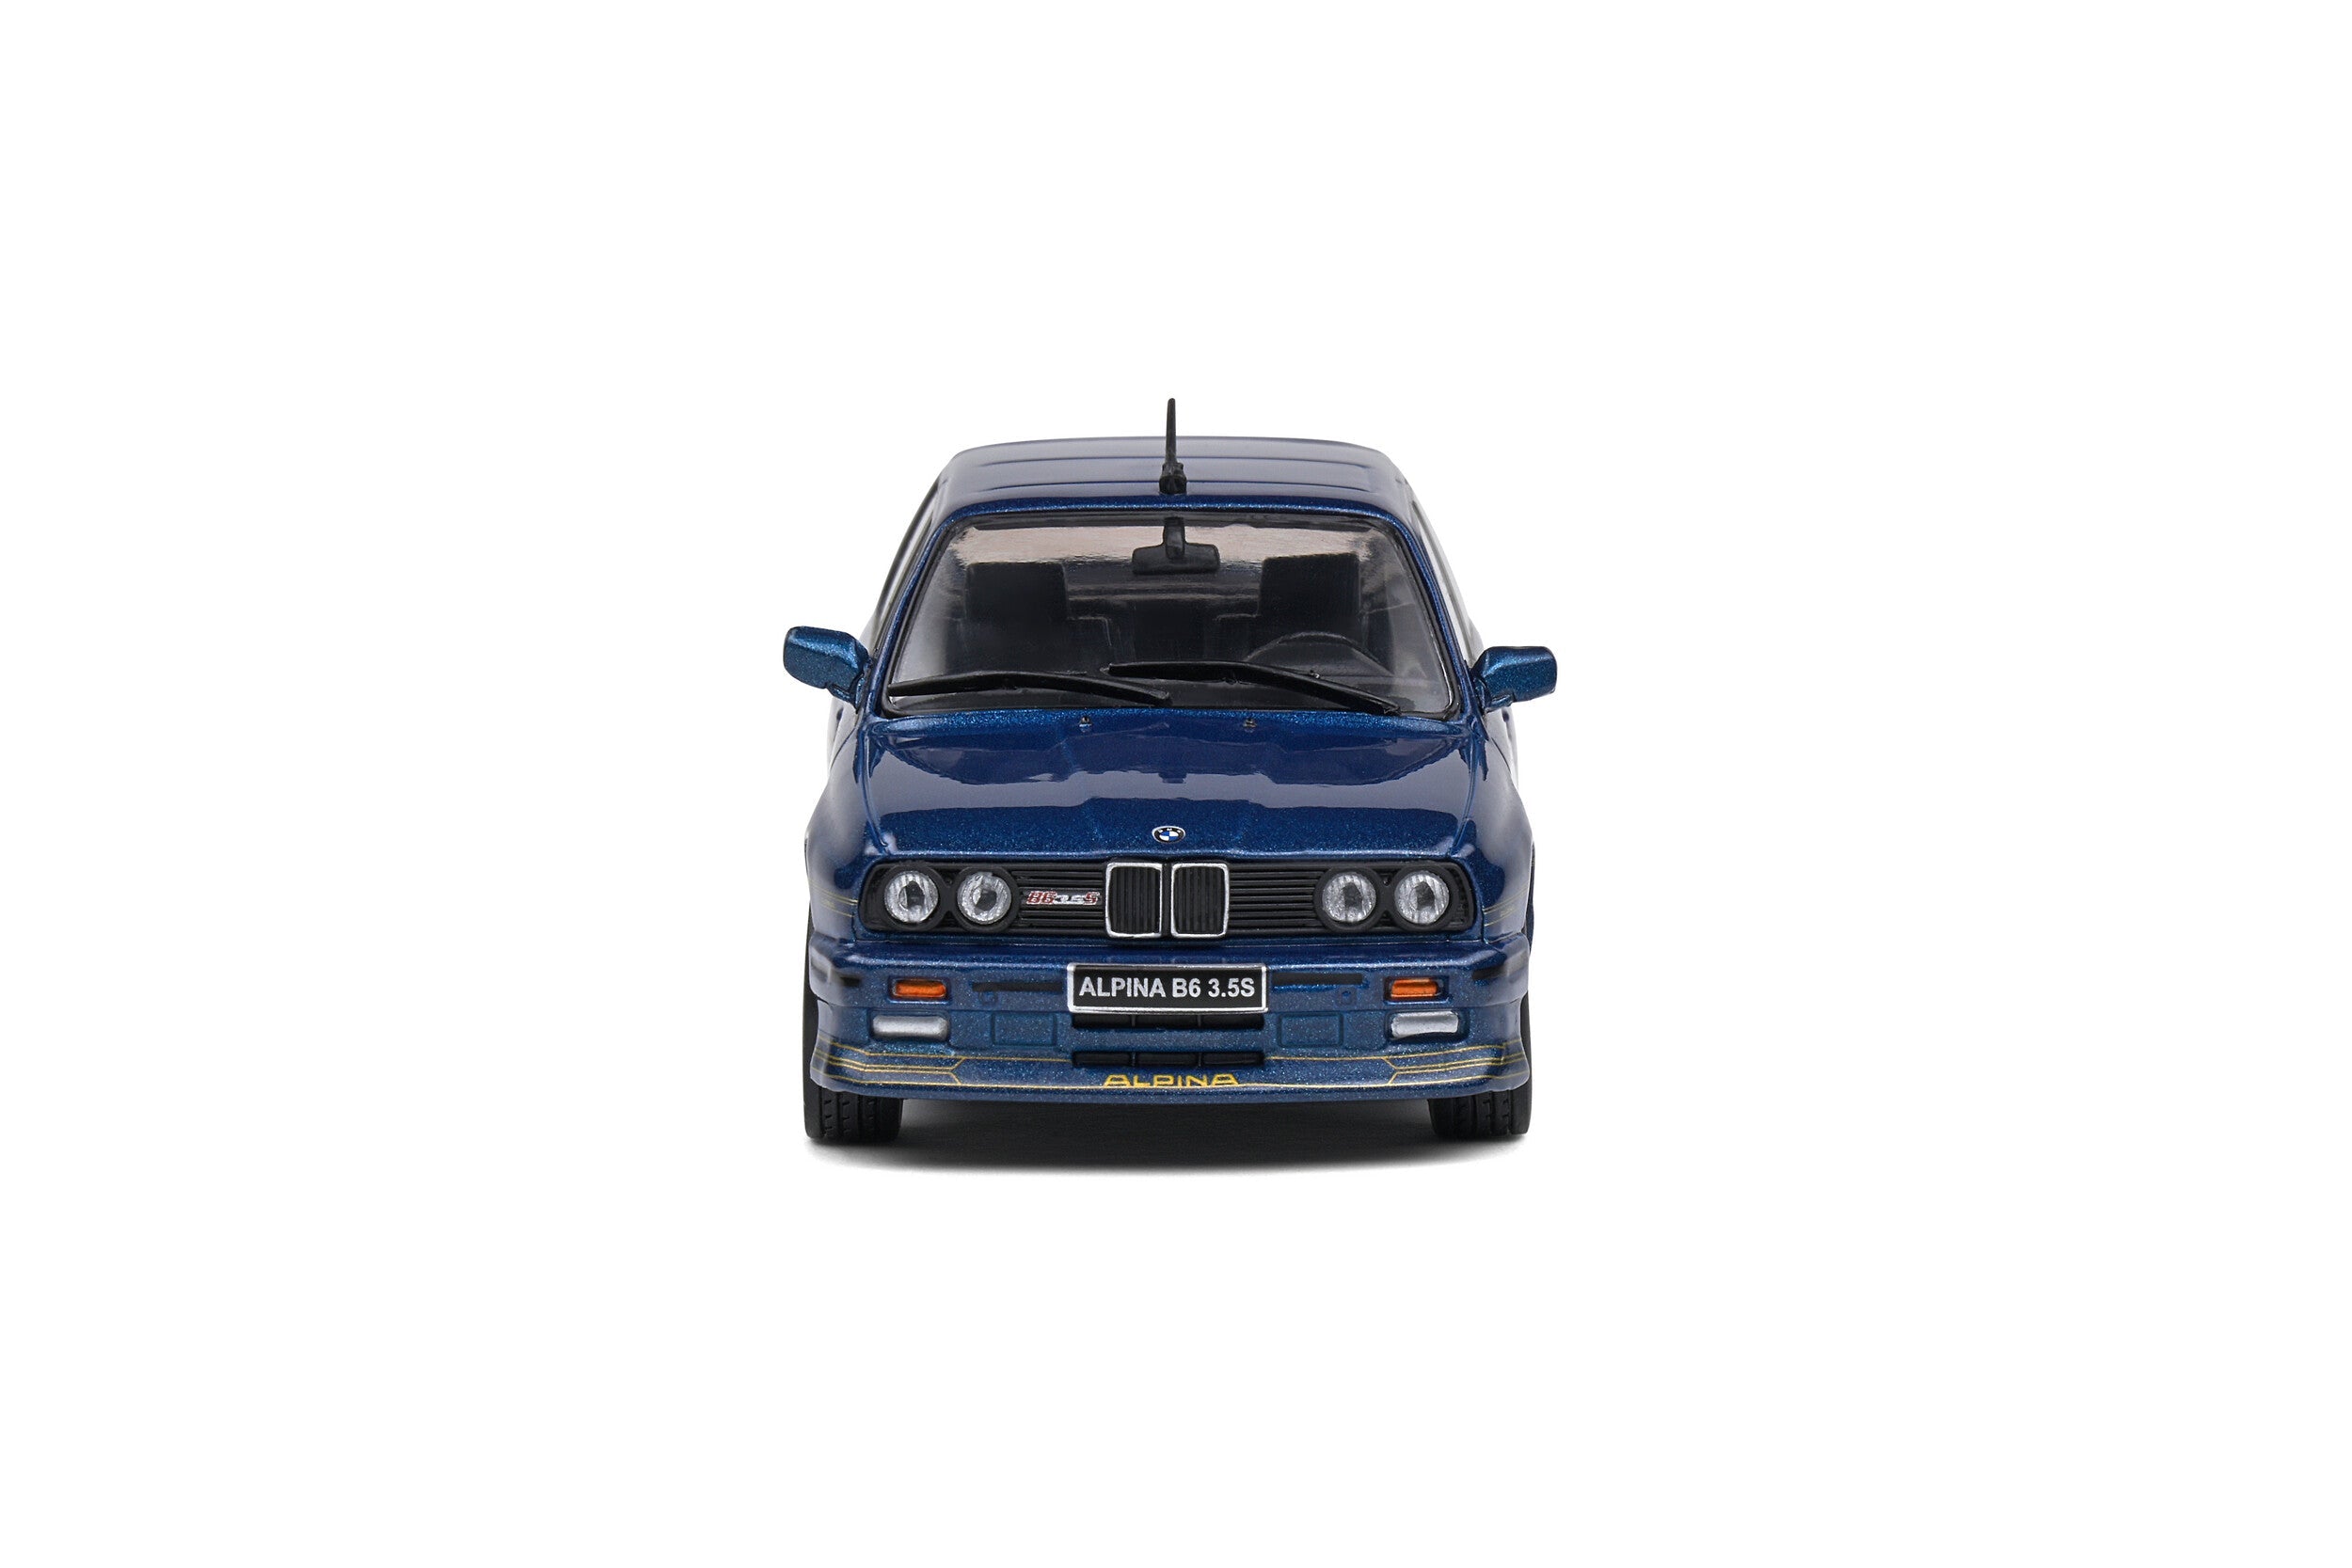 Auto a escala 1:18, marca Solido, Modelo ALPINA E30 B6 – ALPINA BLUE – 1989 - Chido Toys